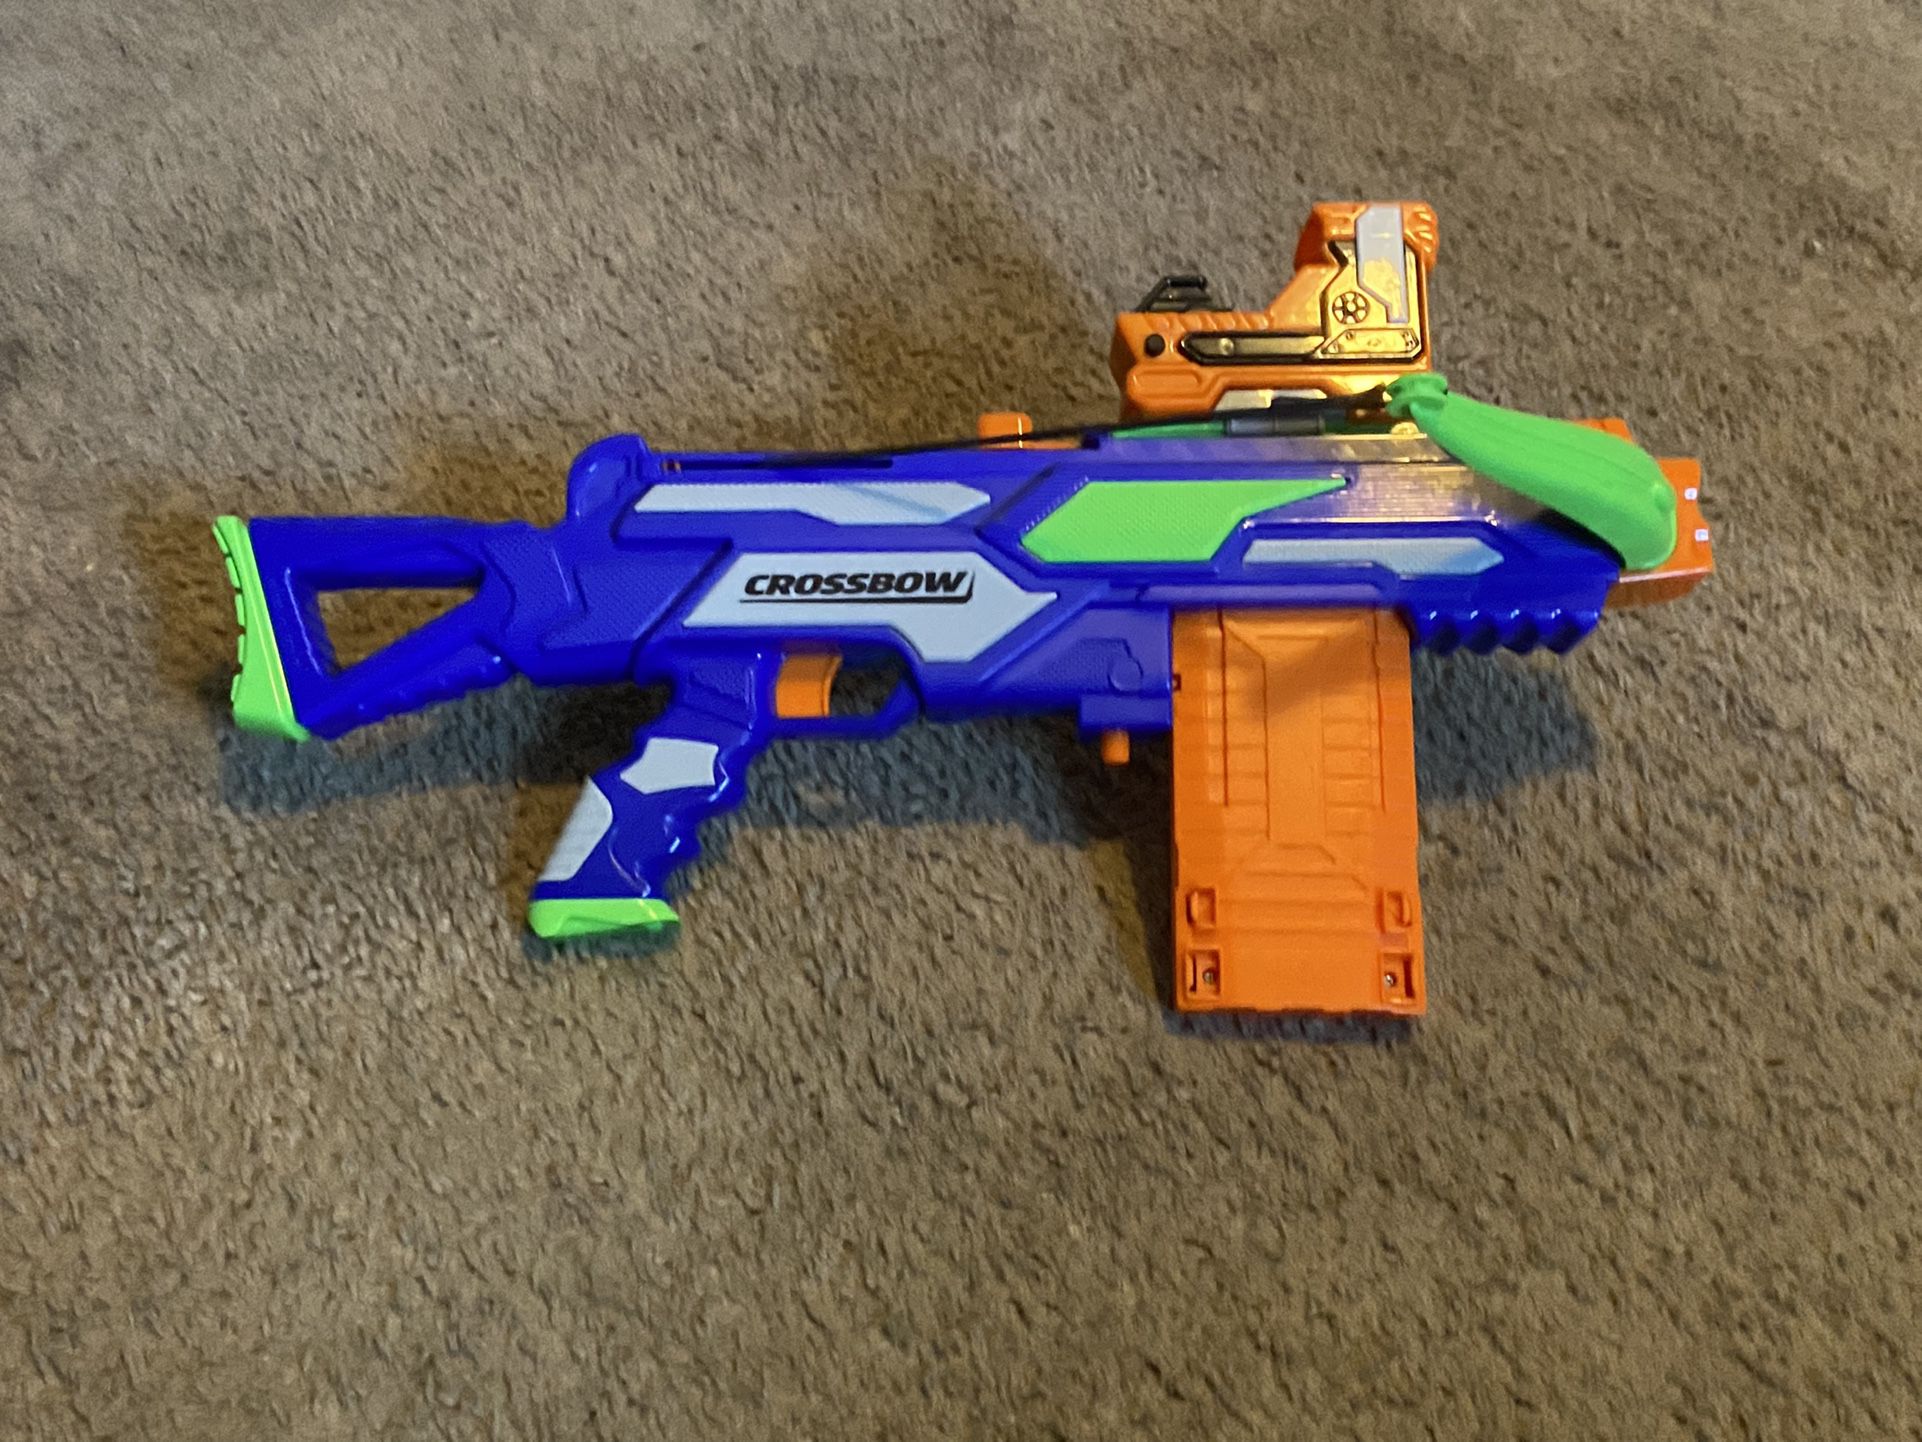 Crossbow Nerf gun